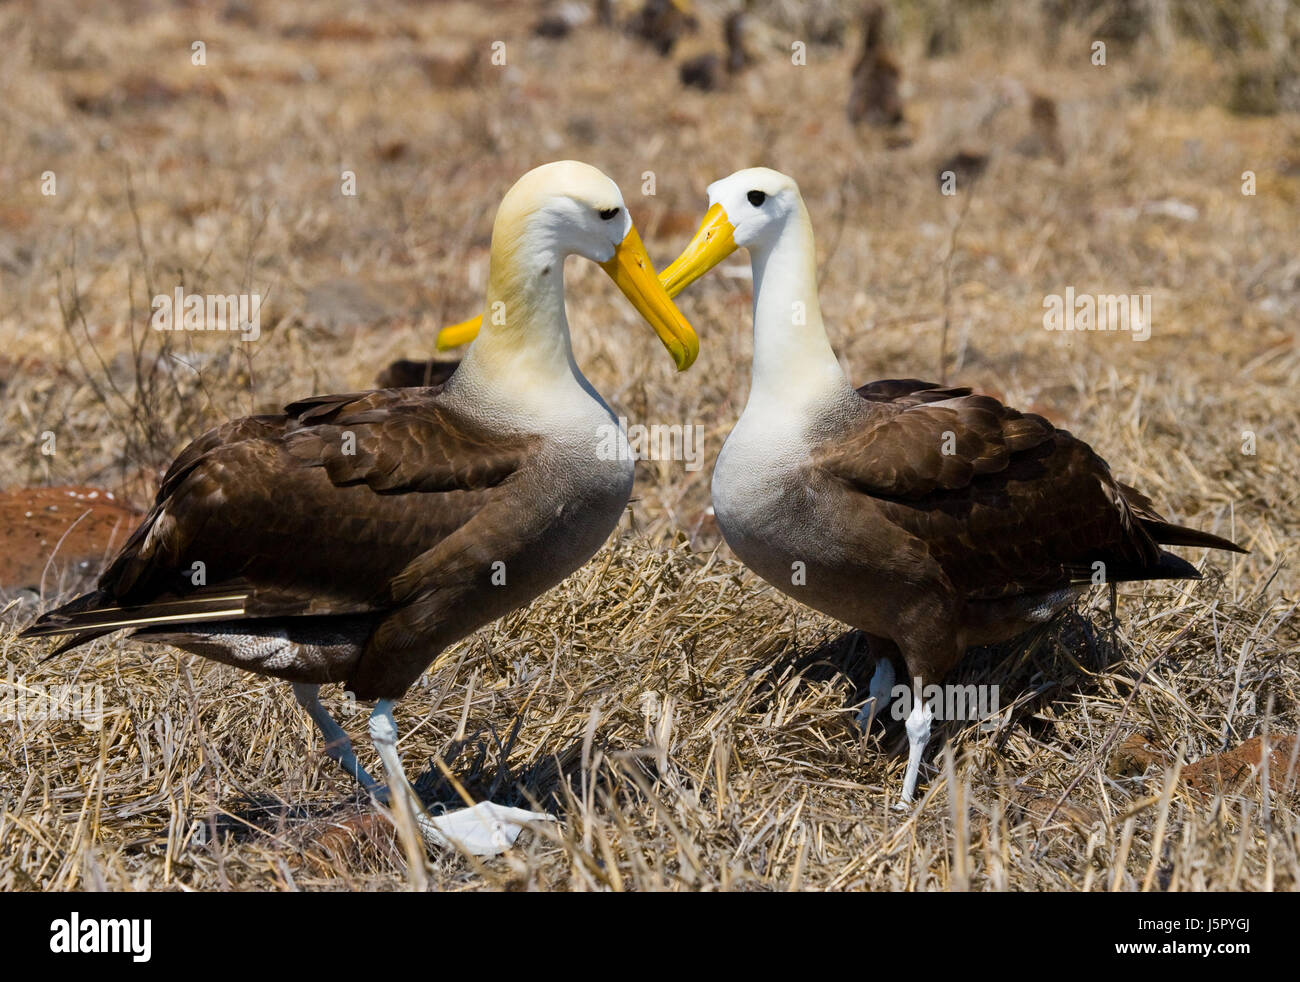 Two albatross sitting on the ground. The Galapagos Islands. Birds. Ecuador. Stock Photo